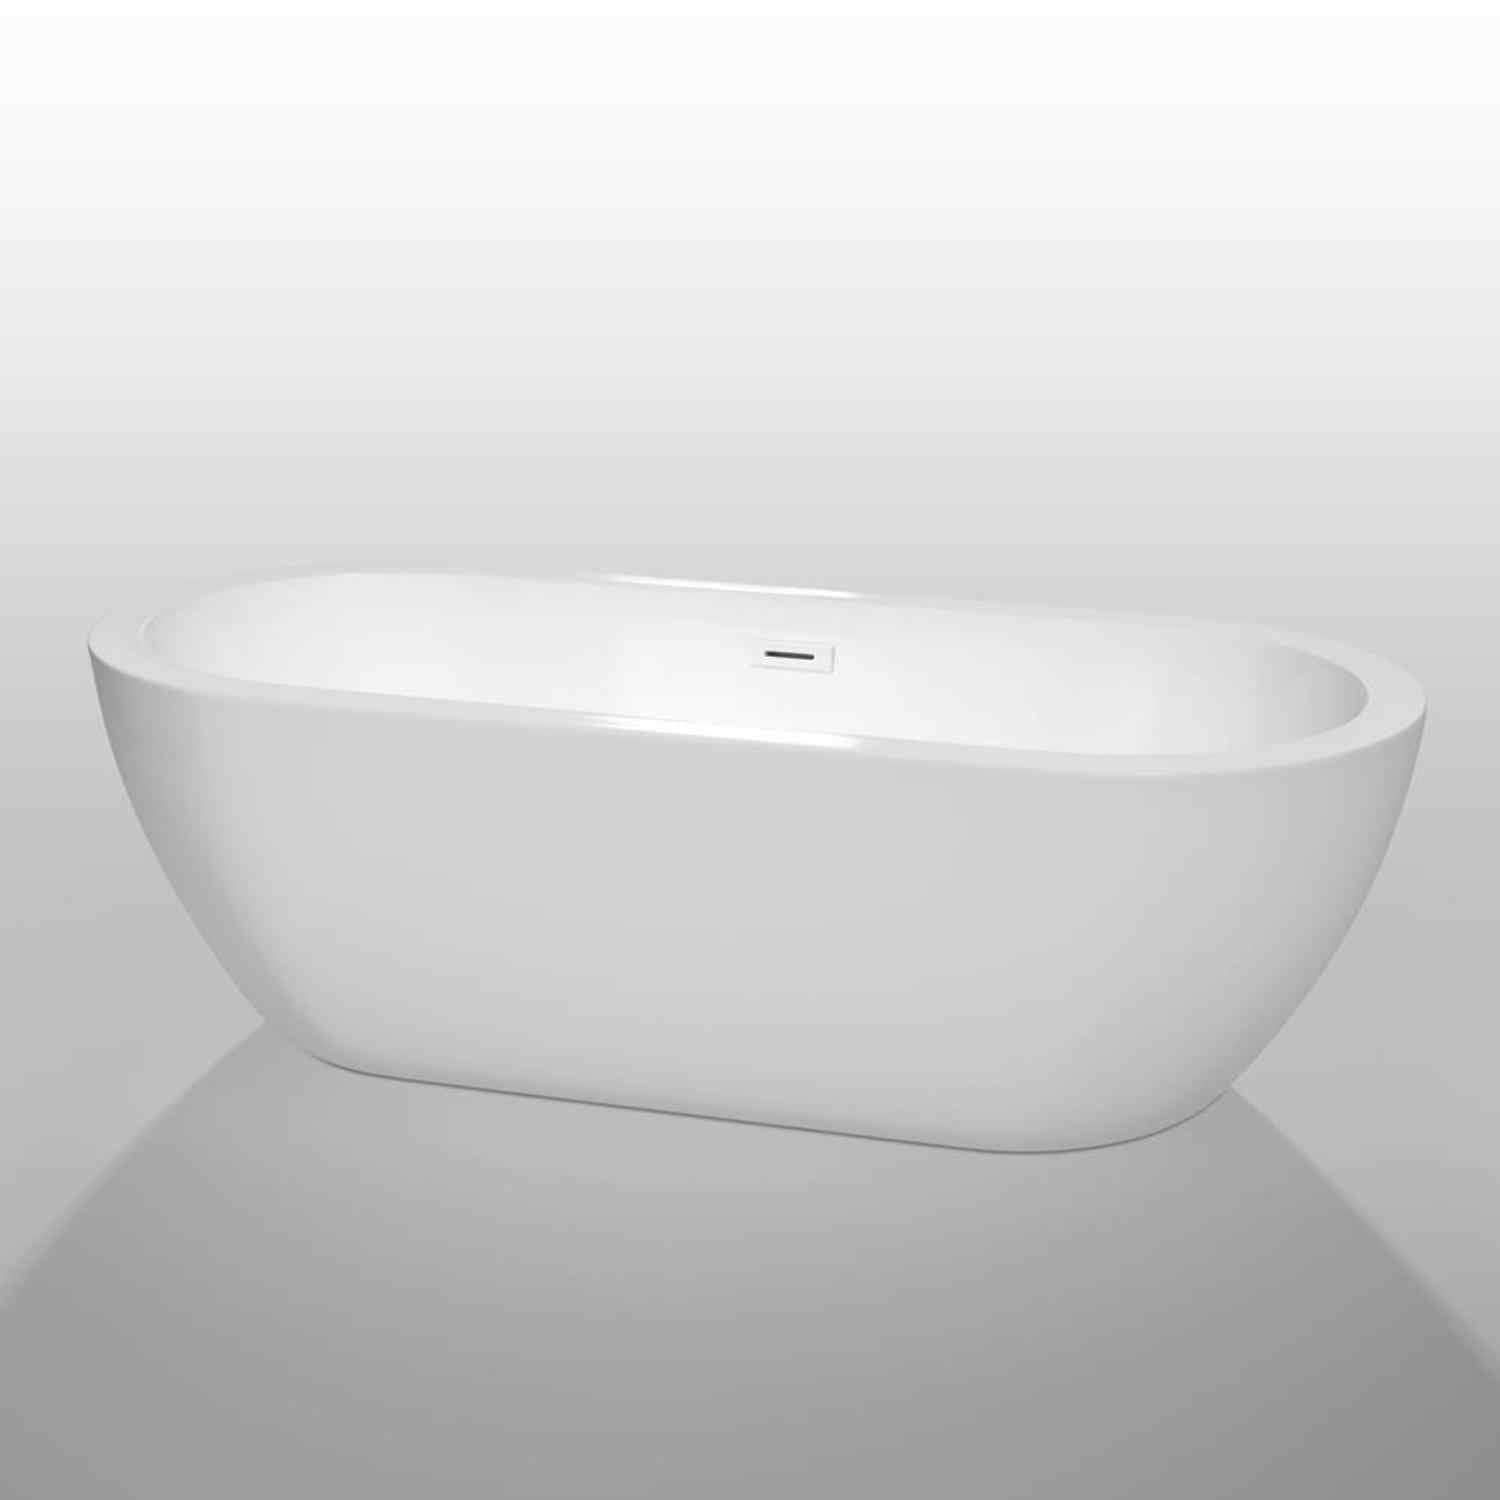 Wyndham collection Soho 72 Inch Freestanding Bathtub in White image